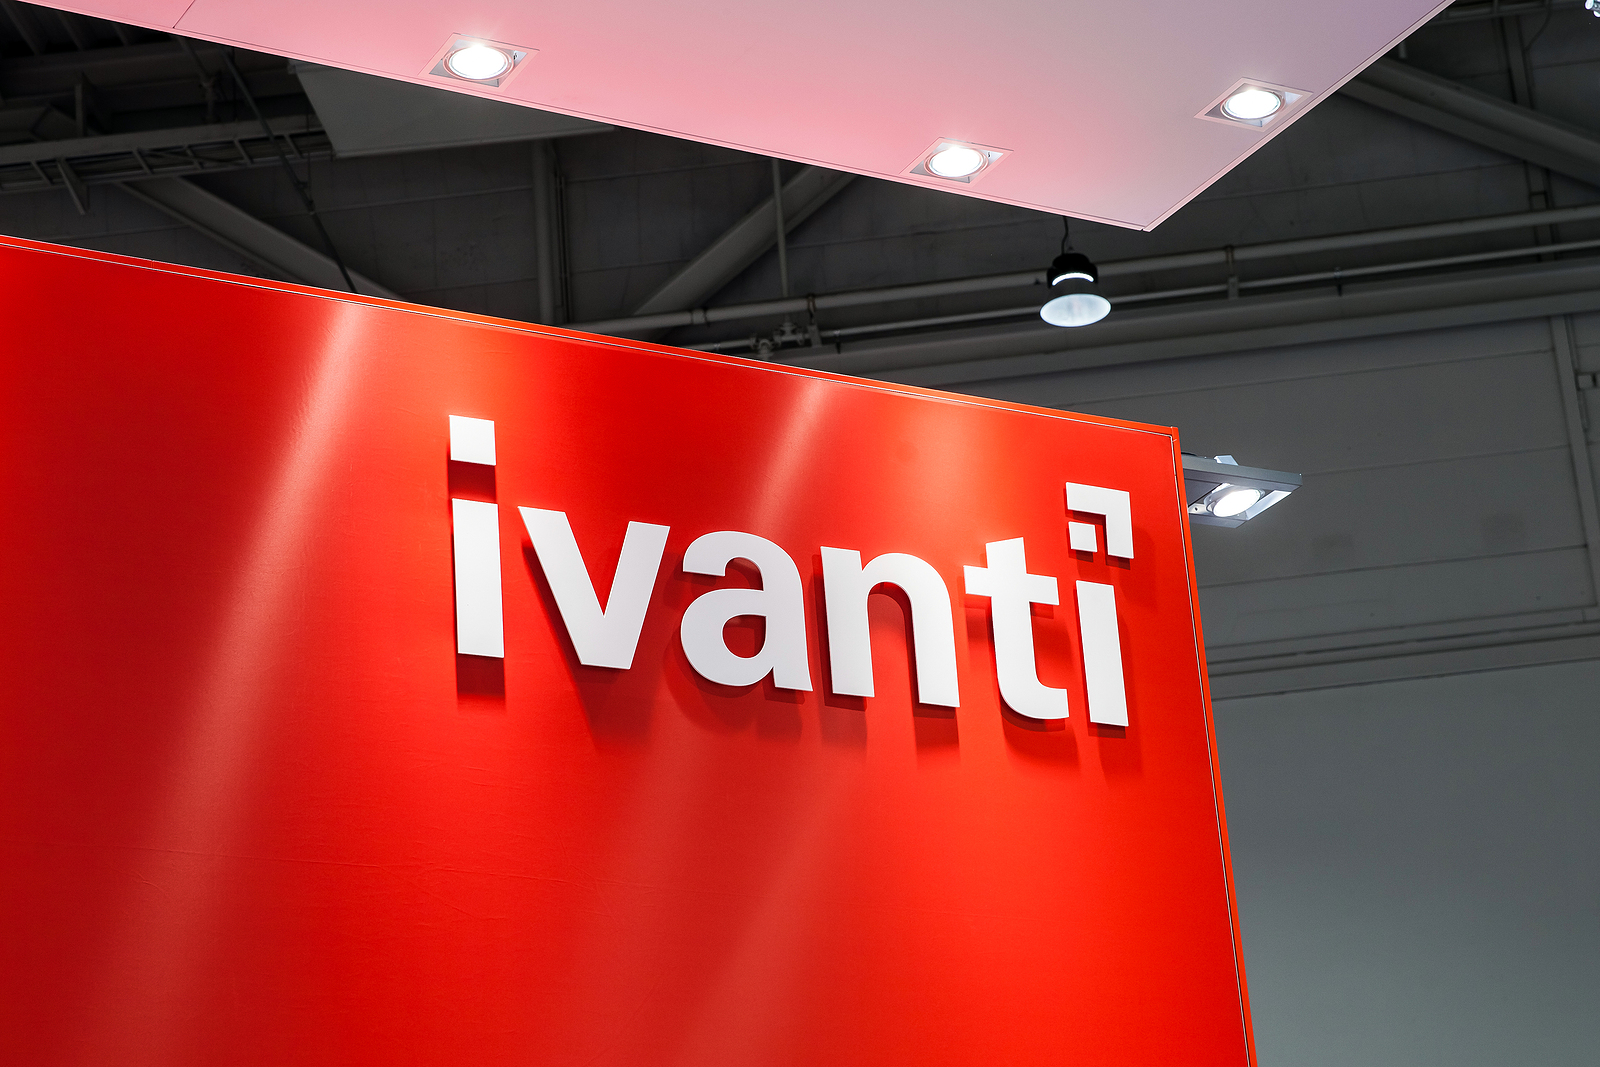 ivanti-patches-critical-vulnerability-in-avalanche-enterprise-mdm-solution